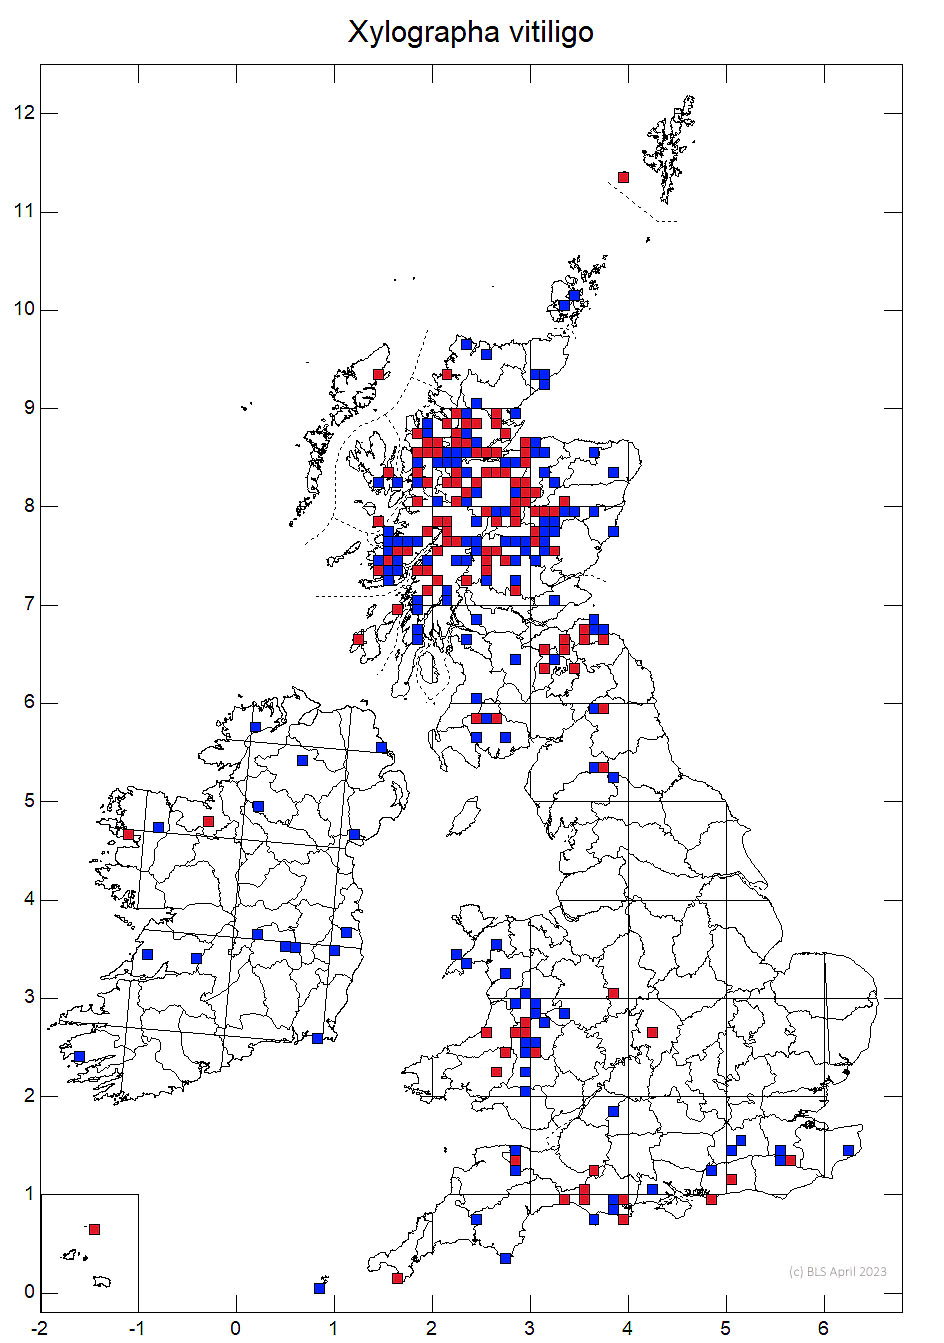 Xylographa vitiligo 10km sq distribution map